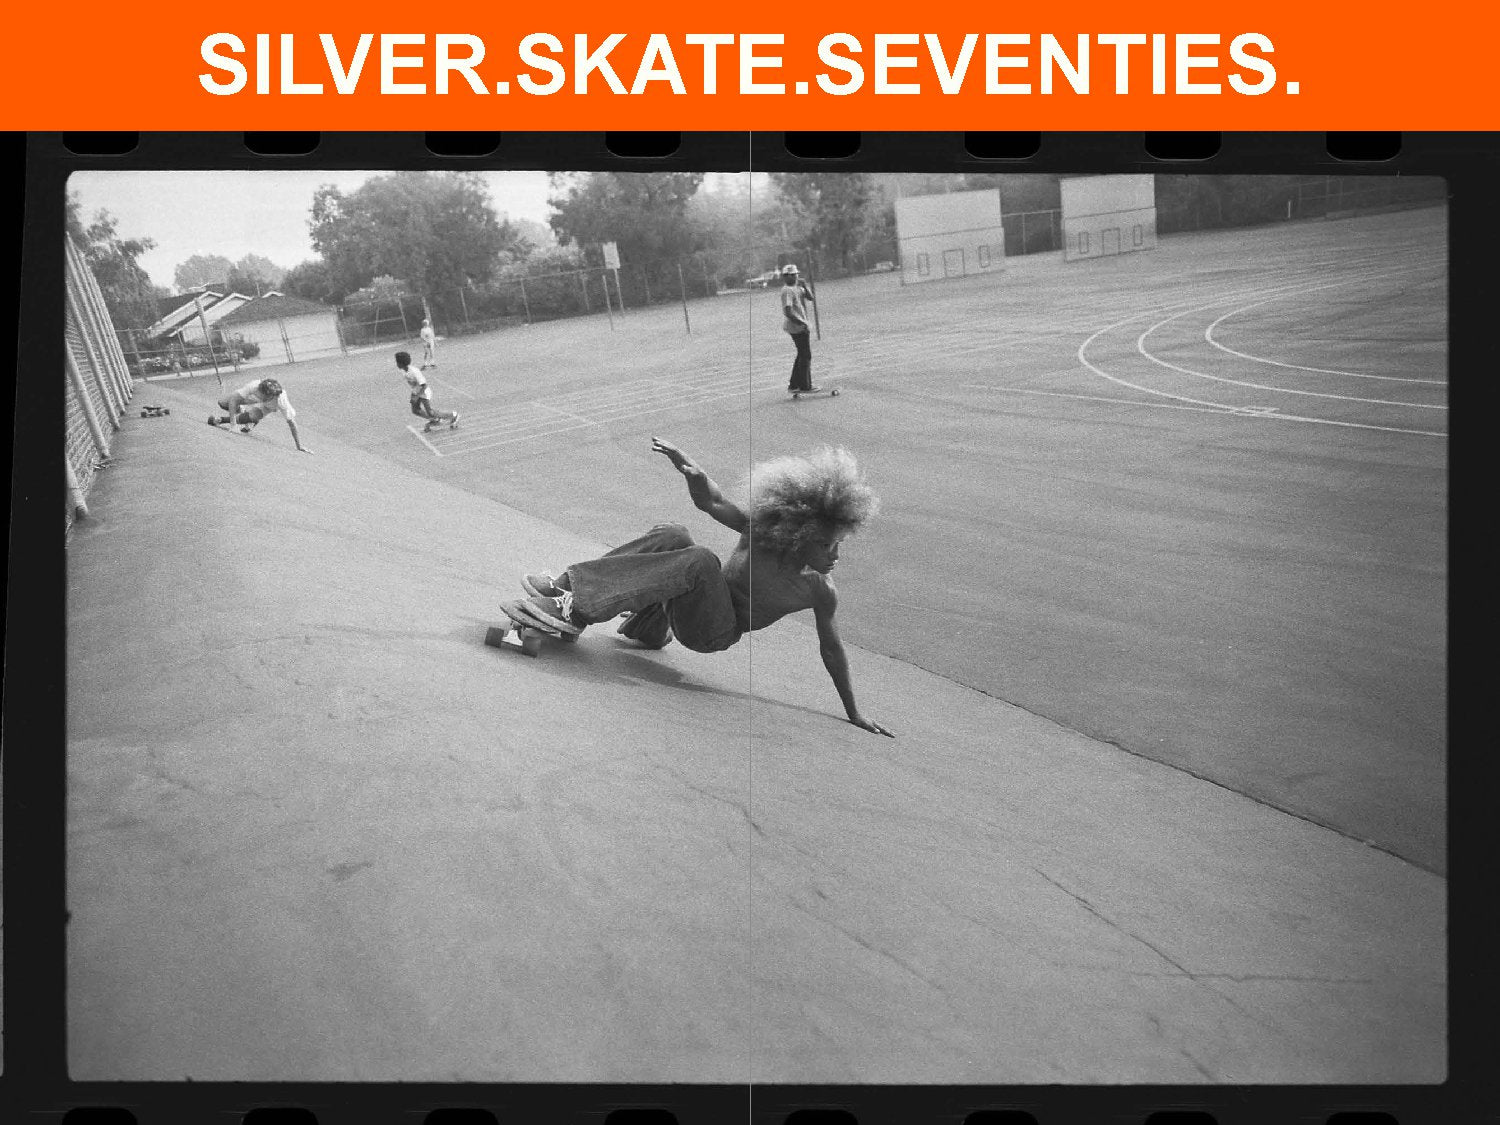 Silver.Skate. Seventies. - REBEL FIN CO.